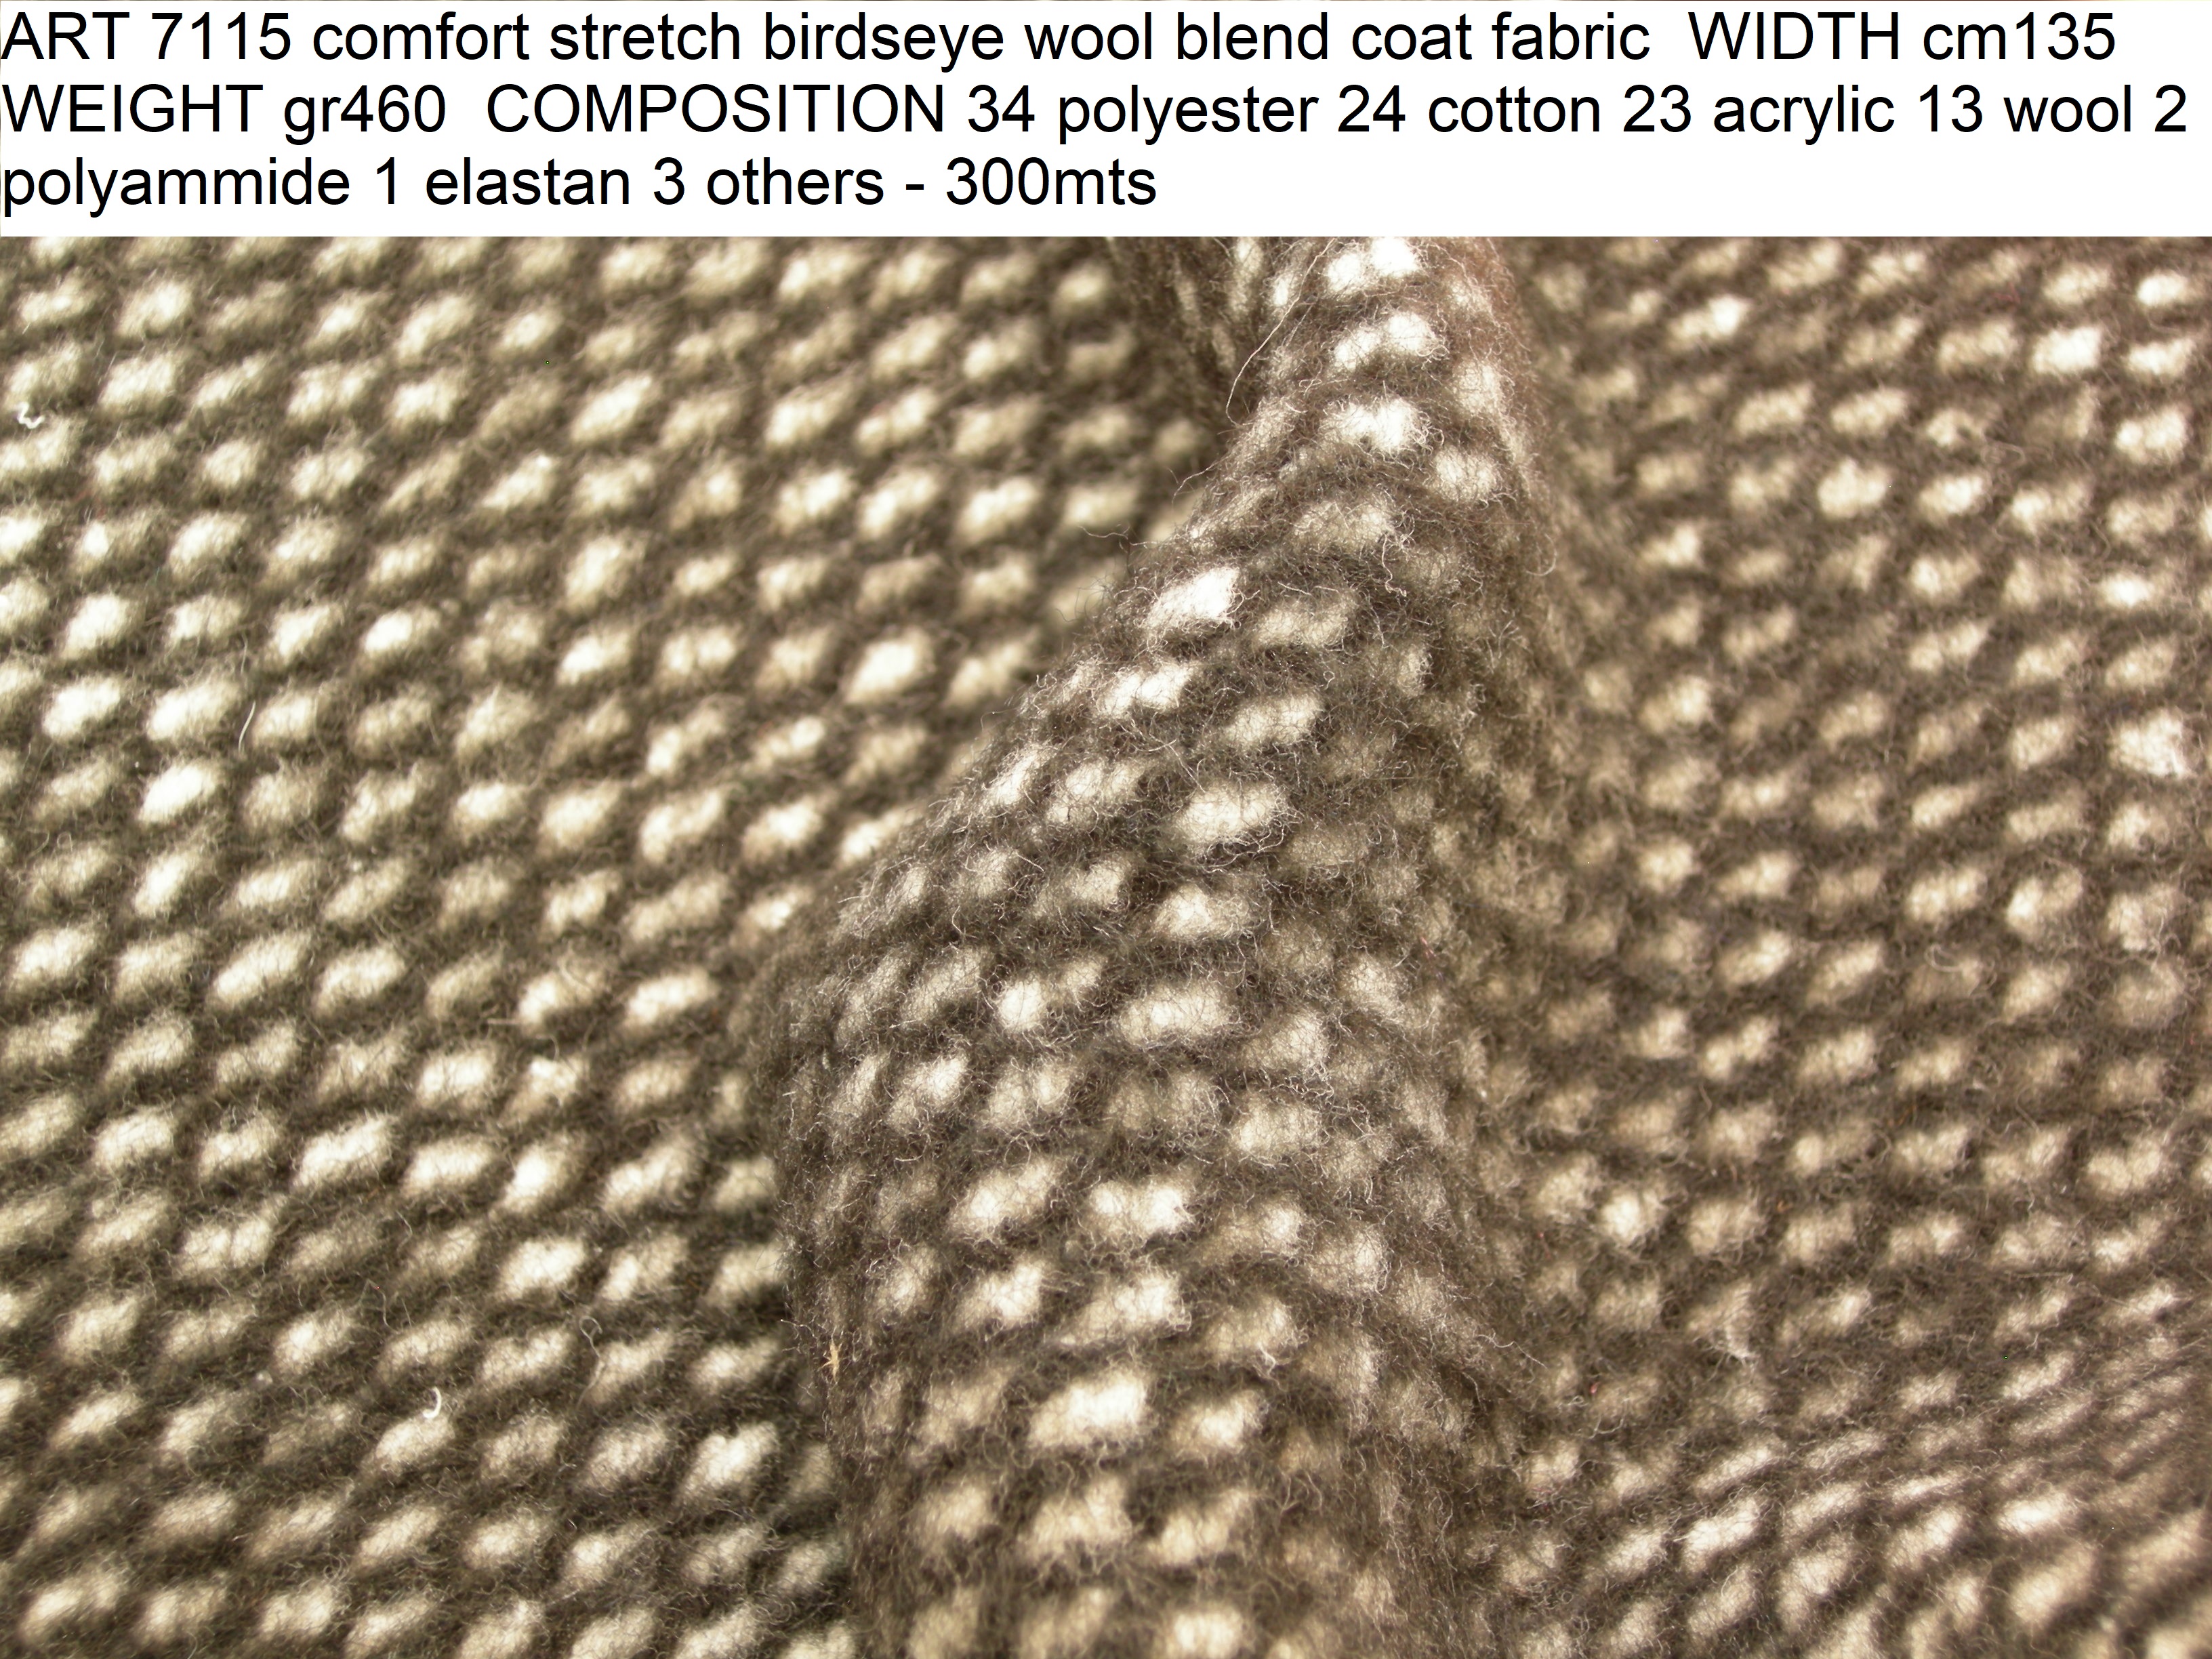 ART 7115 comfort stretch birdseye wool blend coat fabric WIDTH cm135 WEIGHT gr460 COMPOSITION 34 polyester 24 cotton 23 acrylic 13 wool 2 polyammide 1 elastan 3 others - 300mts